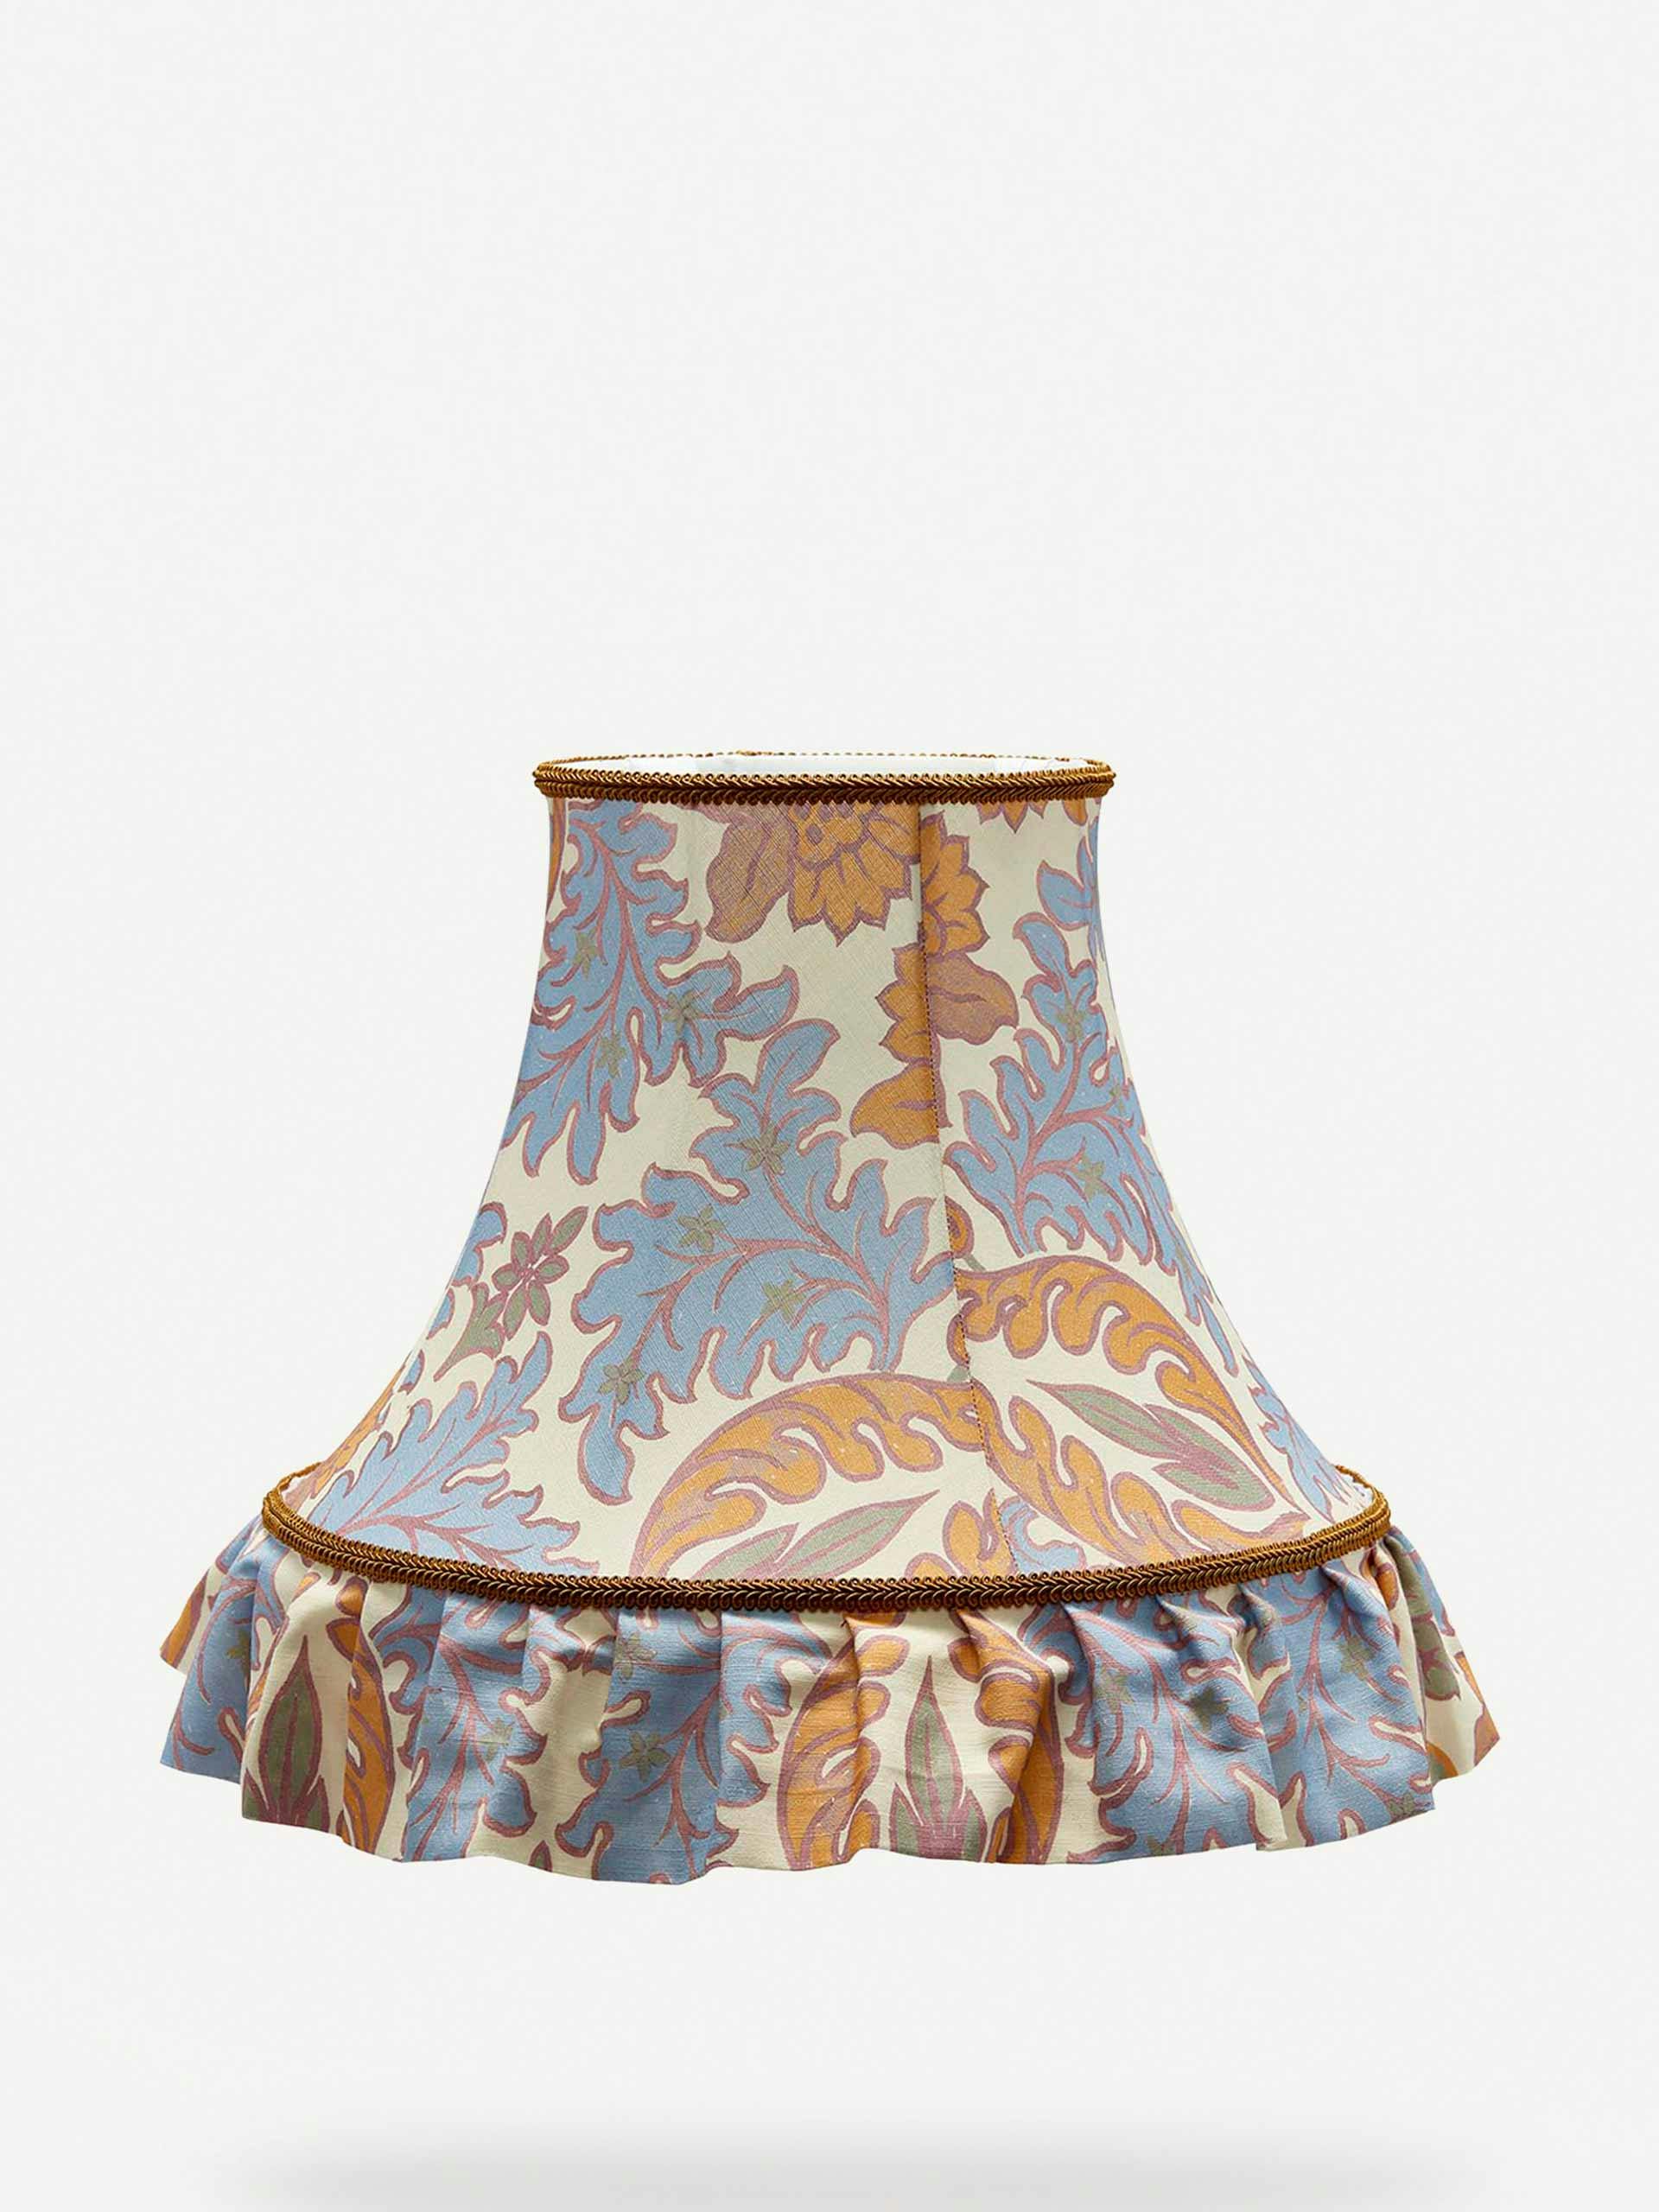 Large petticoat lampshade